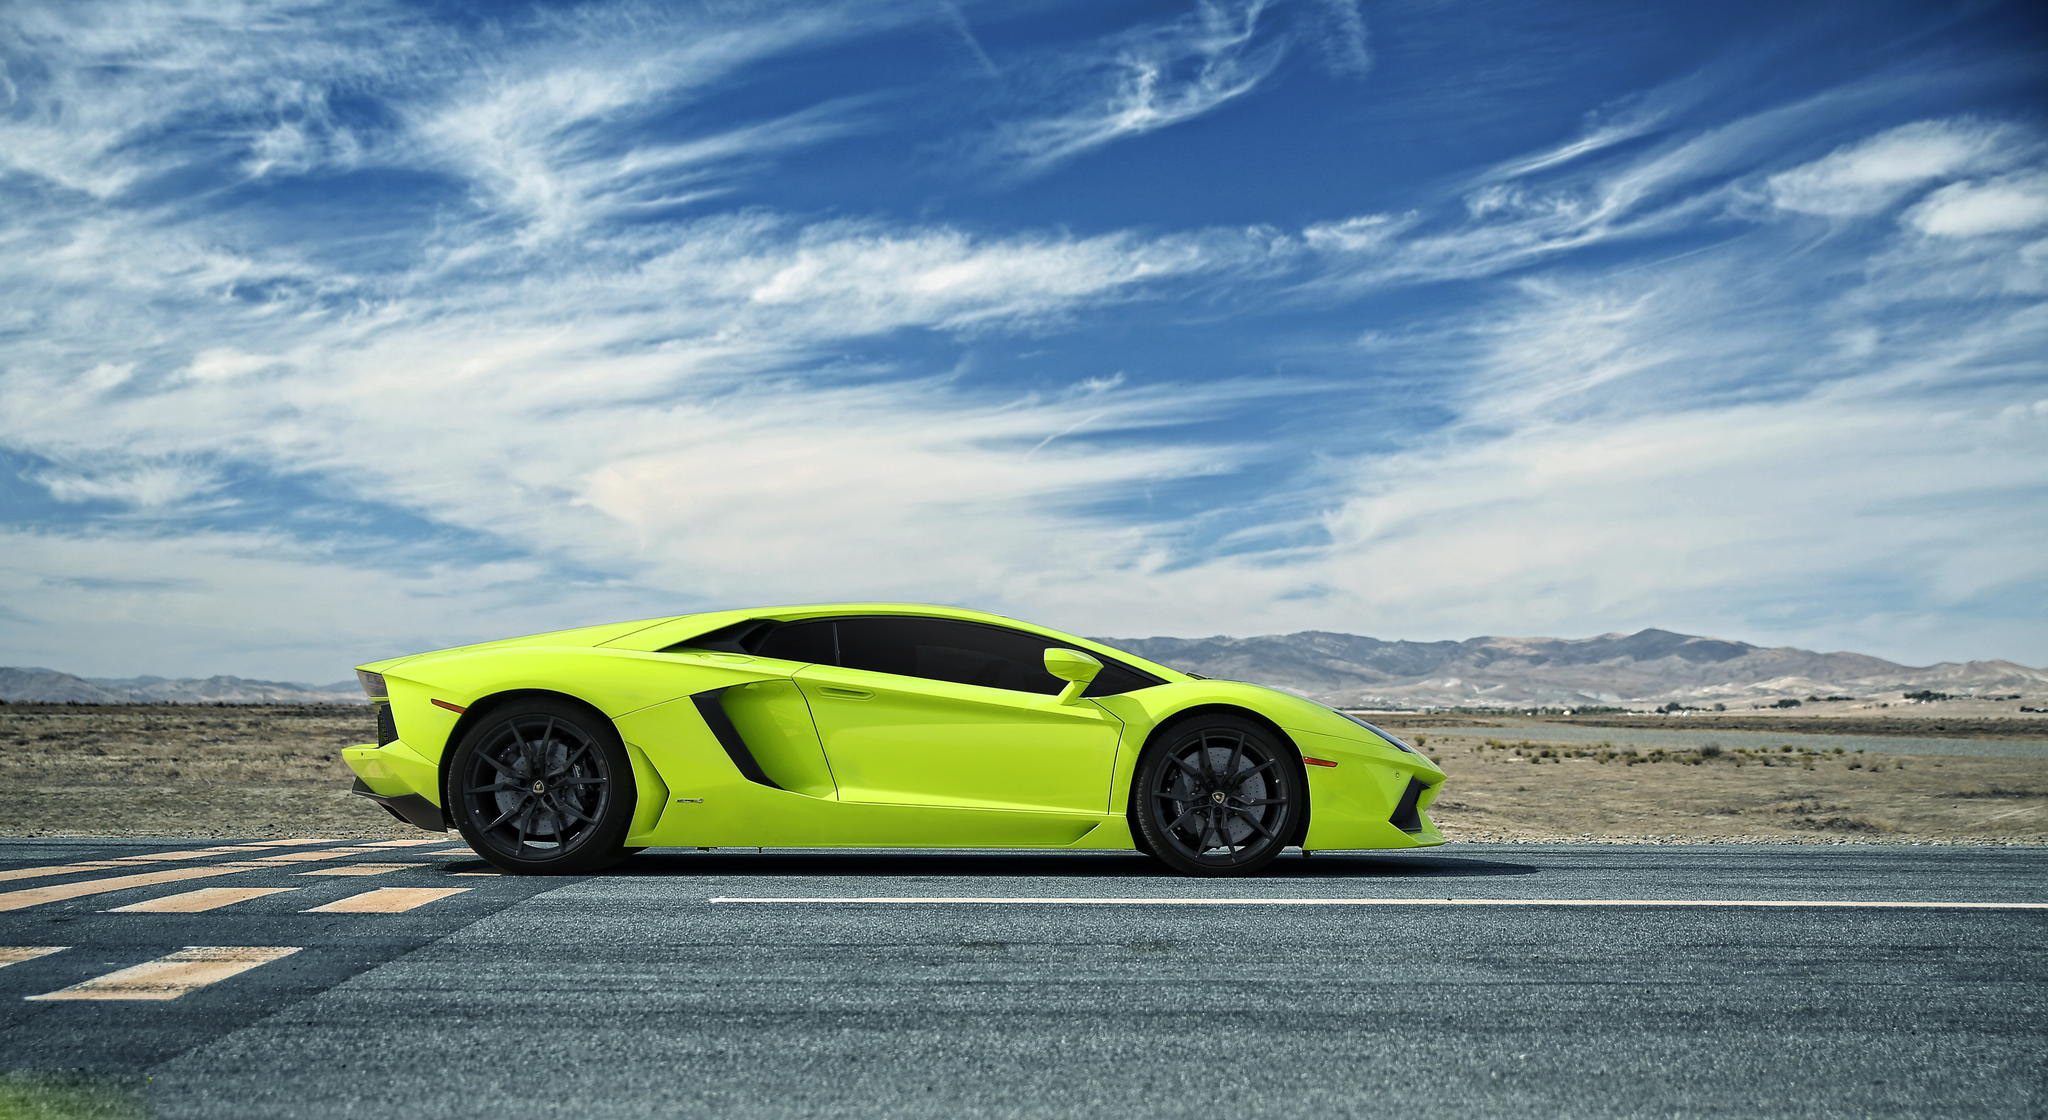 Зеленый автомобиль на дороге. Ламборгини авентадор зеленая. Ламборгини Хуракан и авентадор. Lamborghini Aventador зеленый. Lamborghini Huracan Coupe.